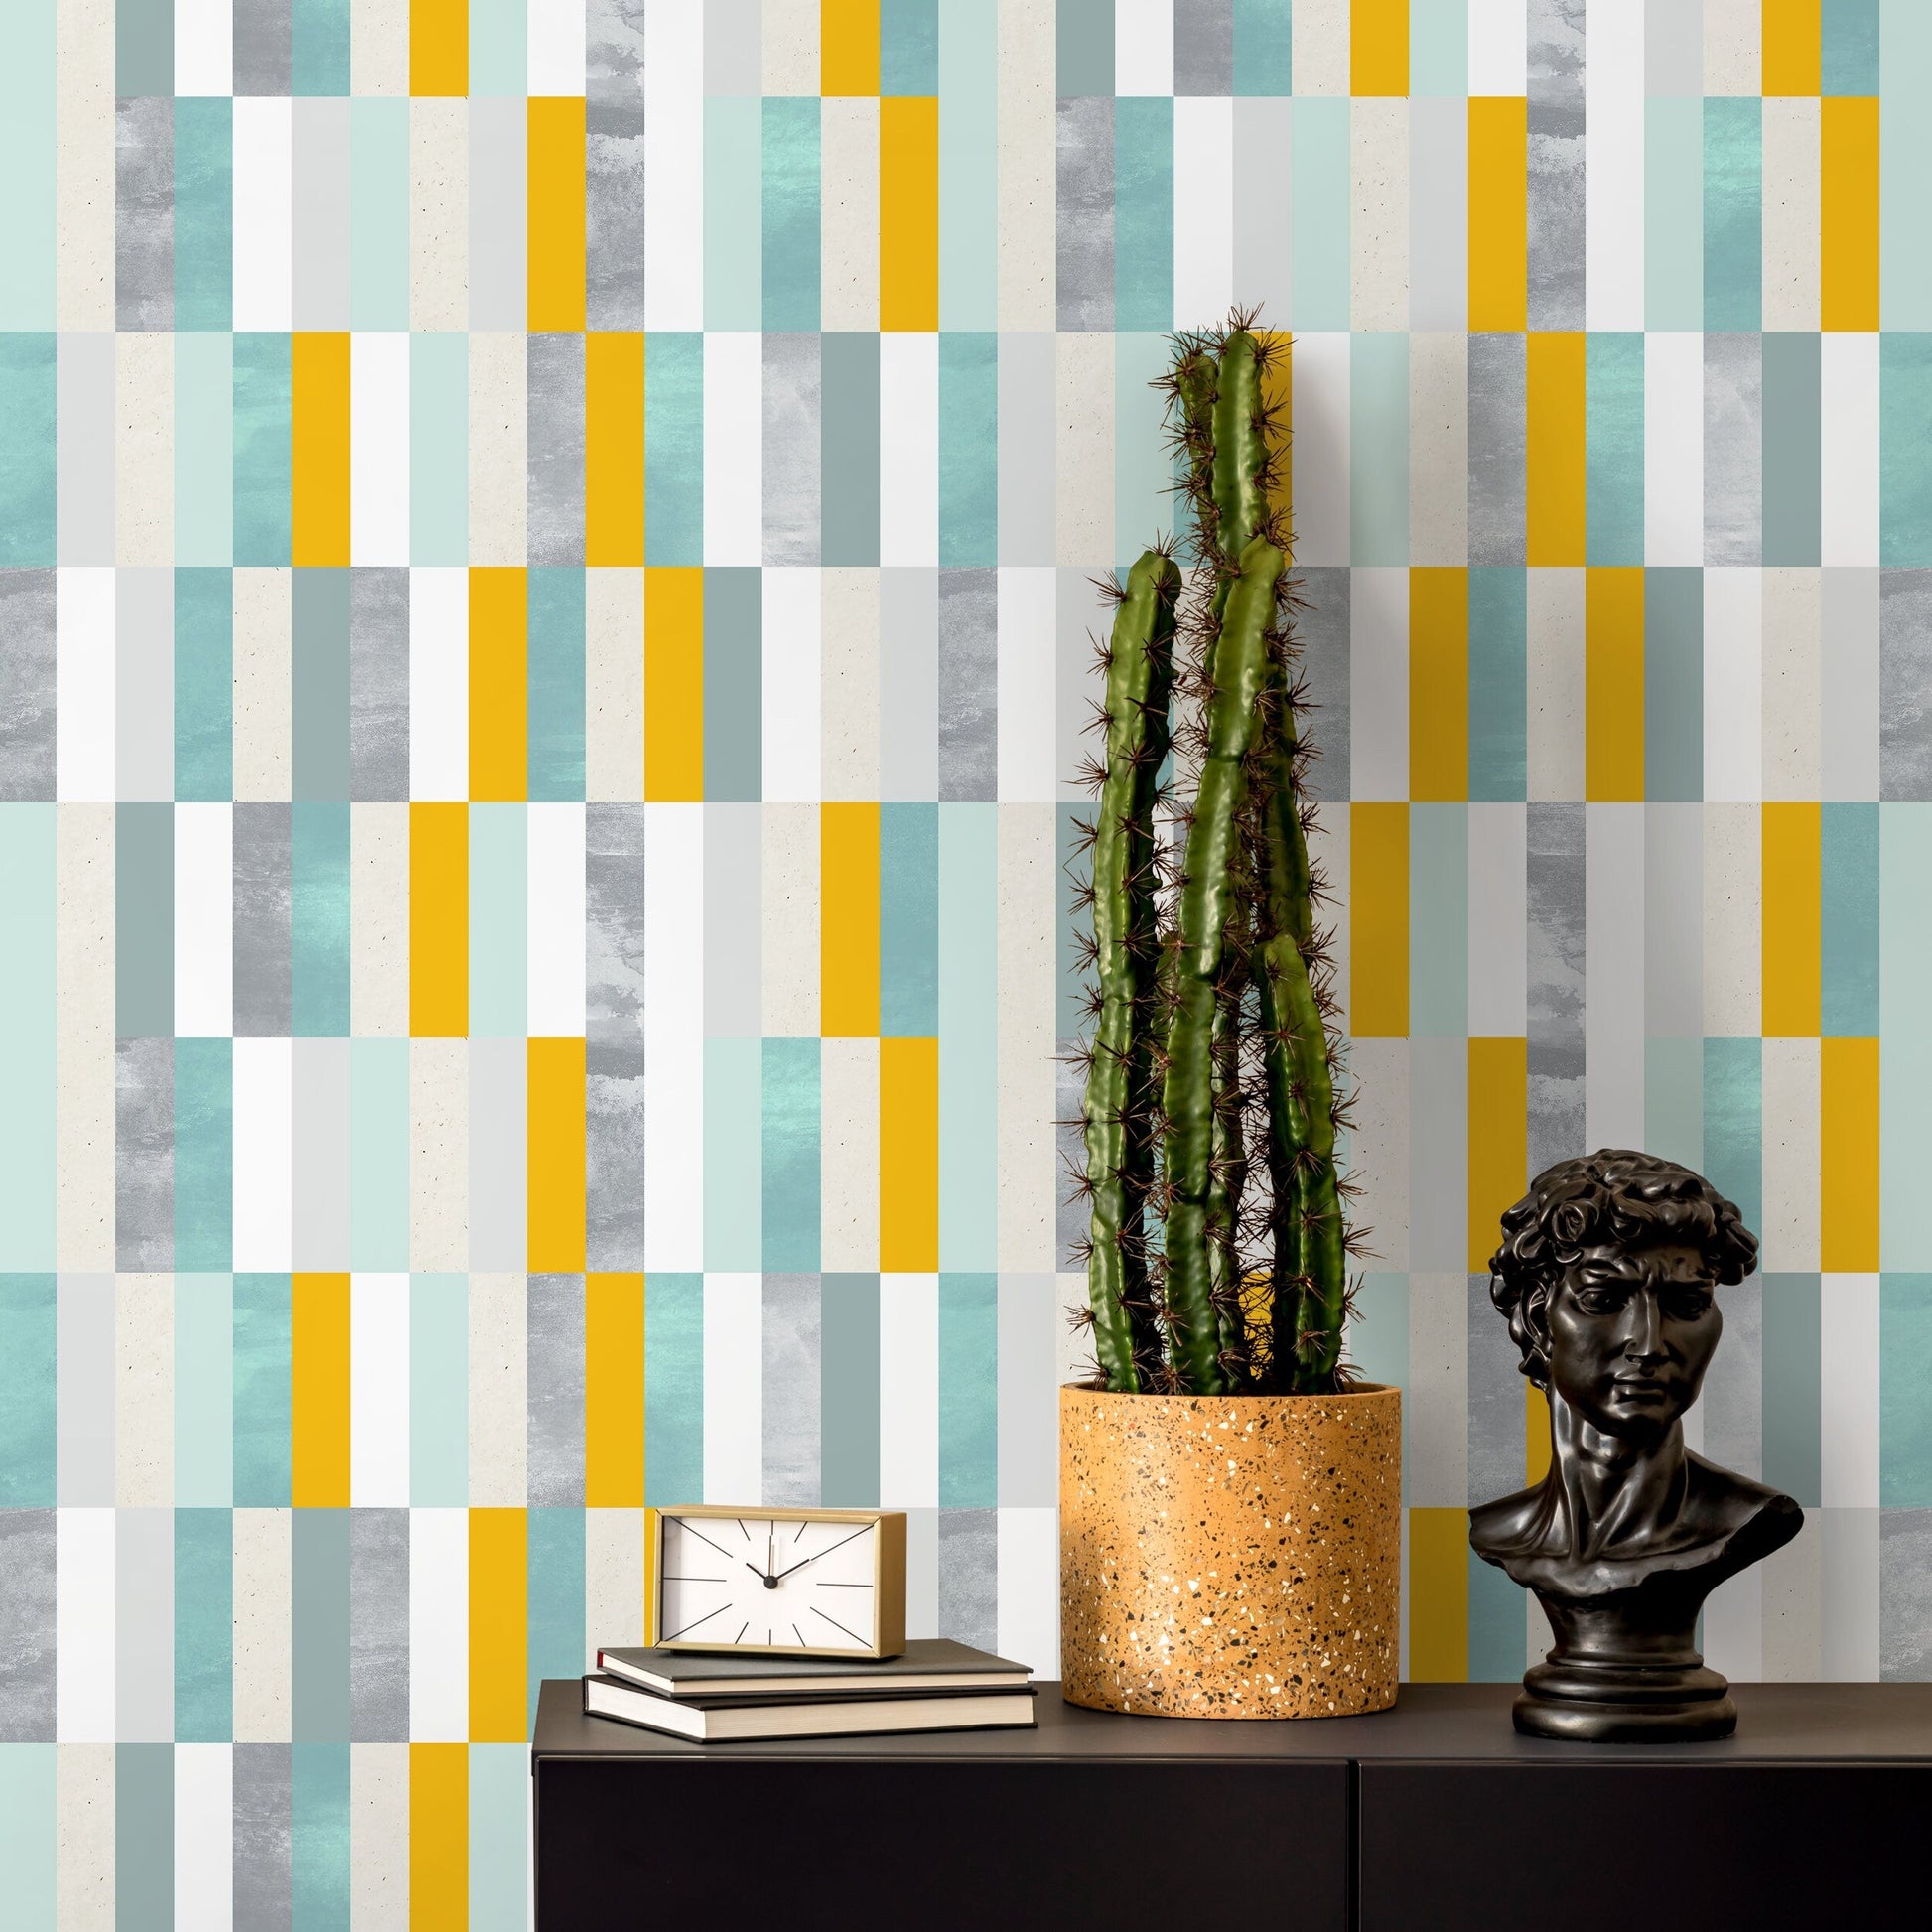 Mosaic Wallpaper, Tile Wallpaper, Removable Wallpaper, Wallpaper, Removable, Peel and Stick Wallpaper - A177